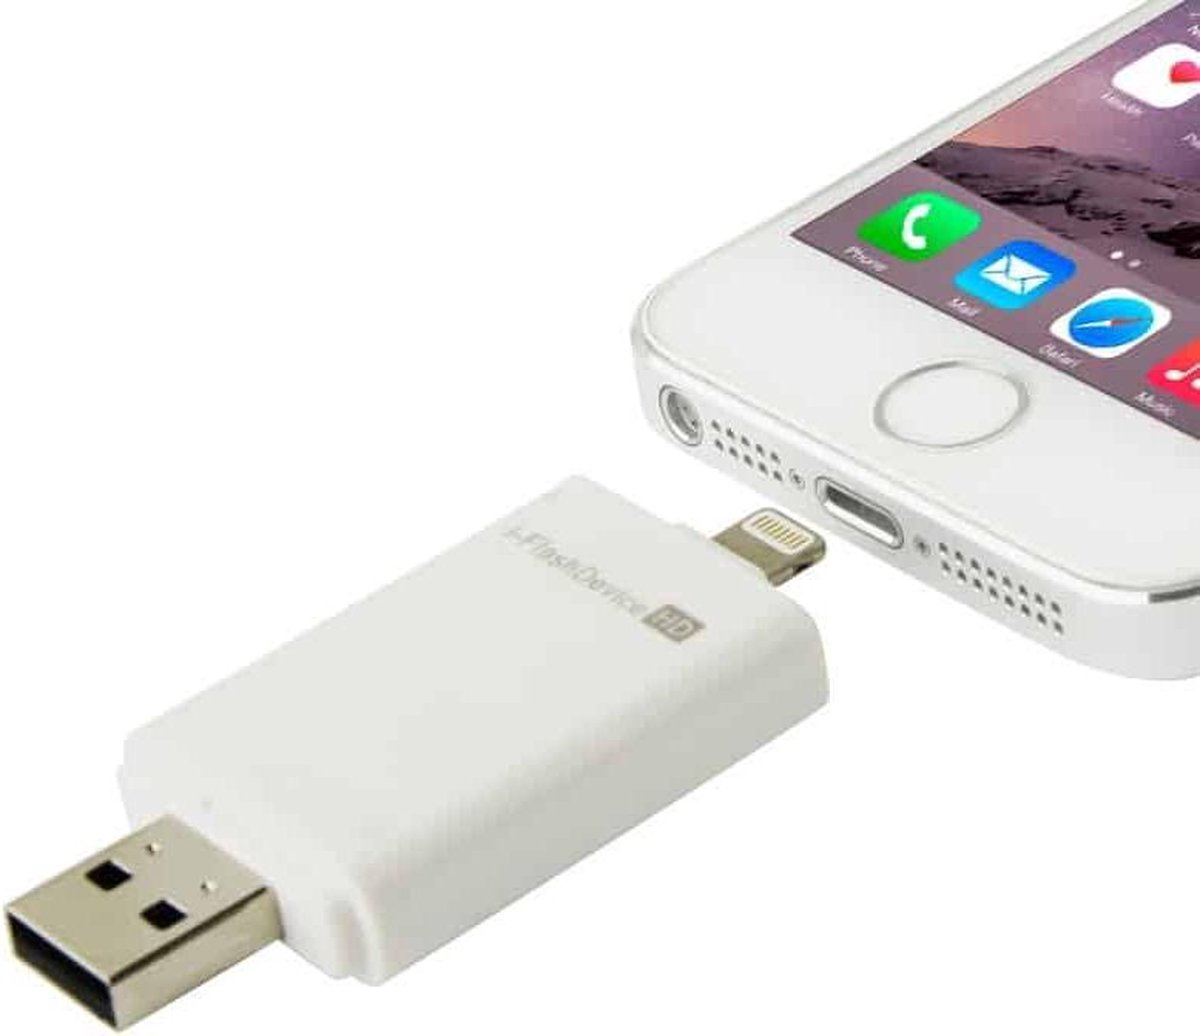 32 GB i-Flash Driver HD U Disk USB-stick Memory Stick voor iPhone / iPad / iPod touch (wit) - Merkloos